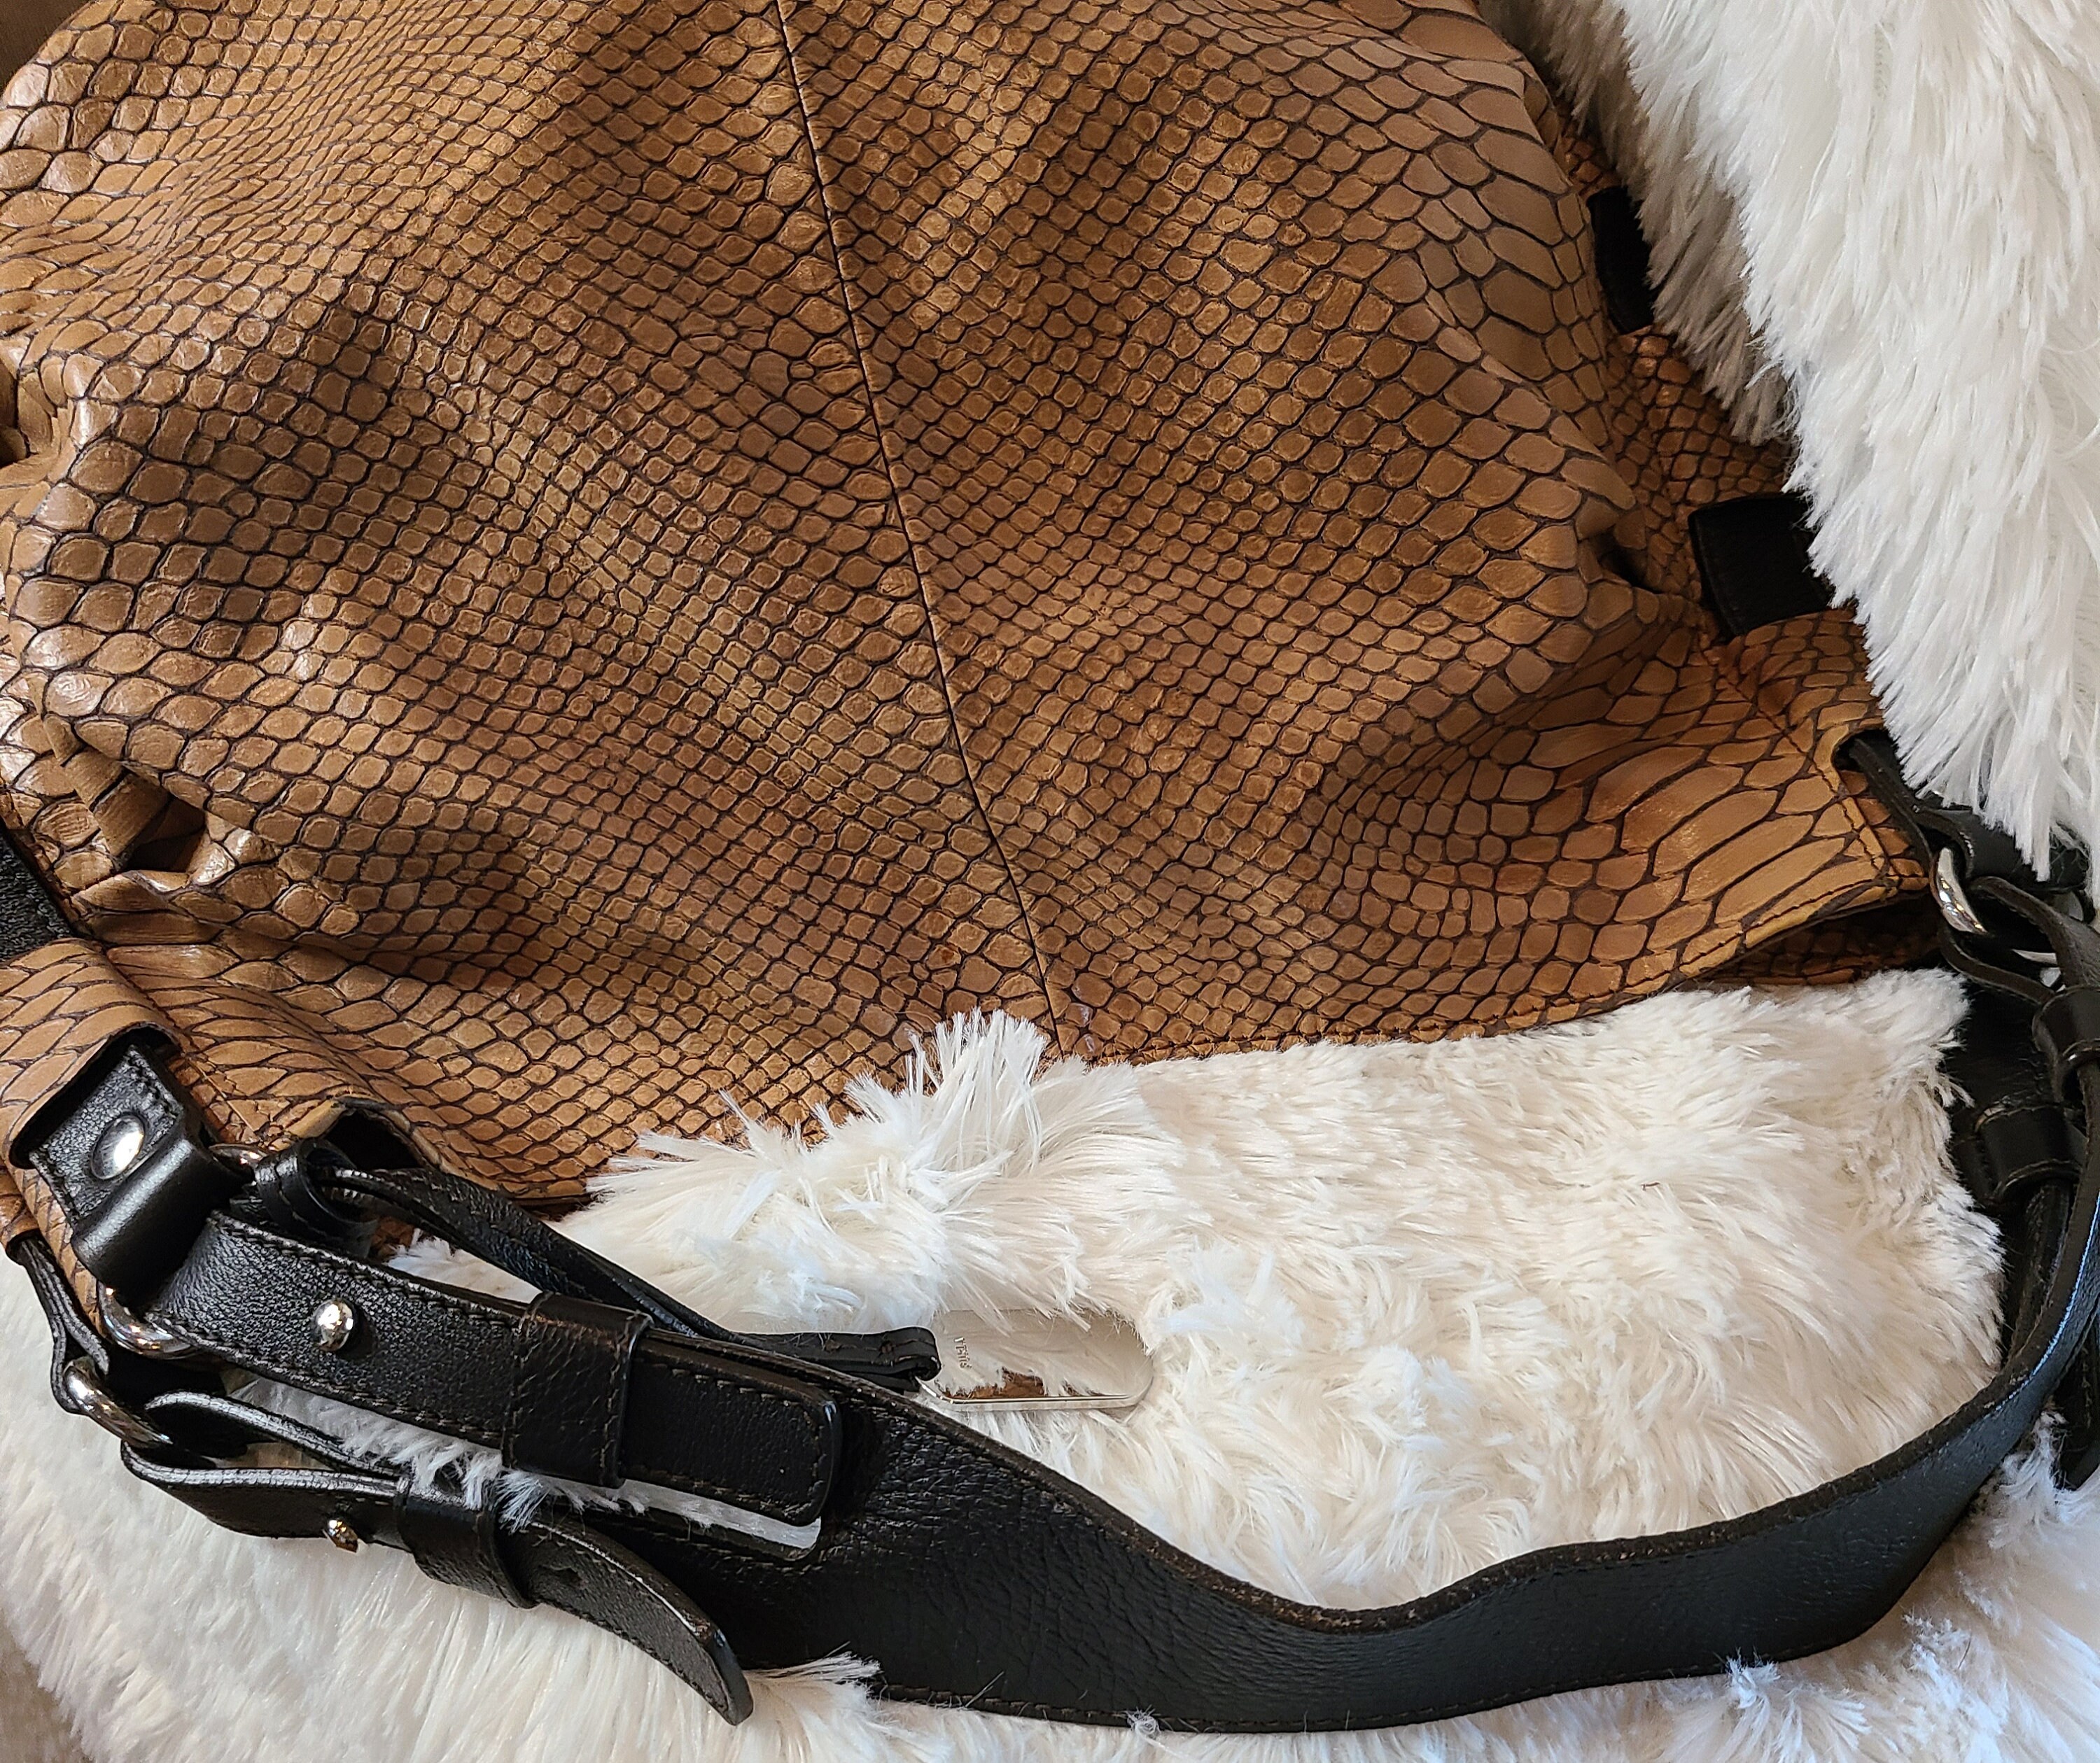 Furla Dark Brown Python Embossed Leather Elisabeth Hobo